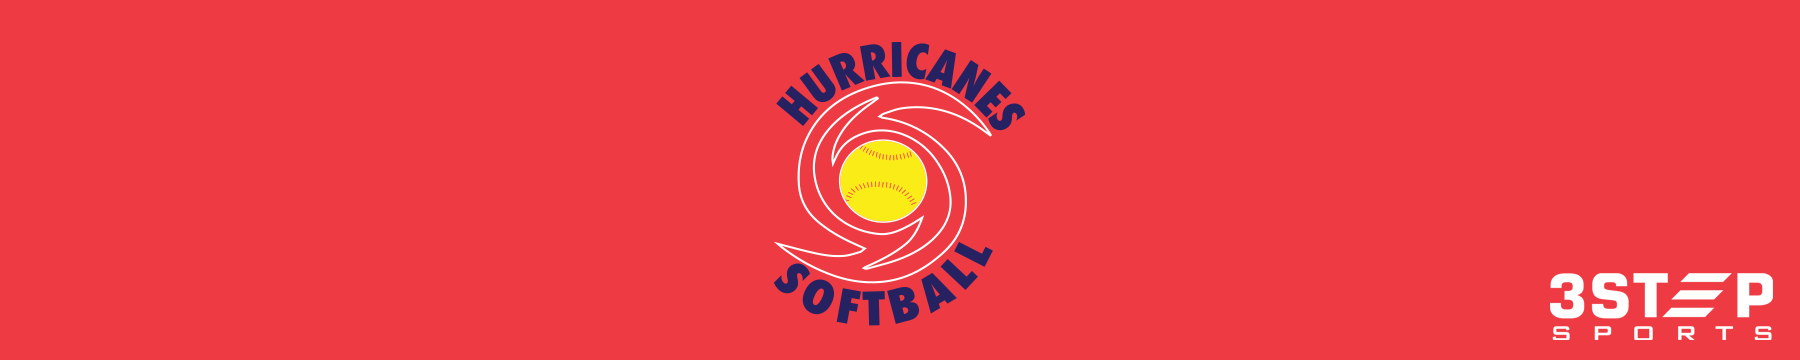 Hurricanes Softball